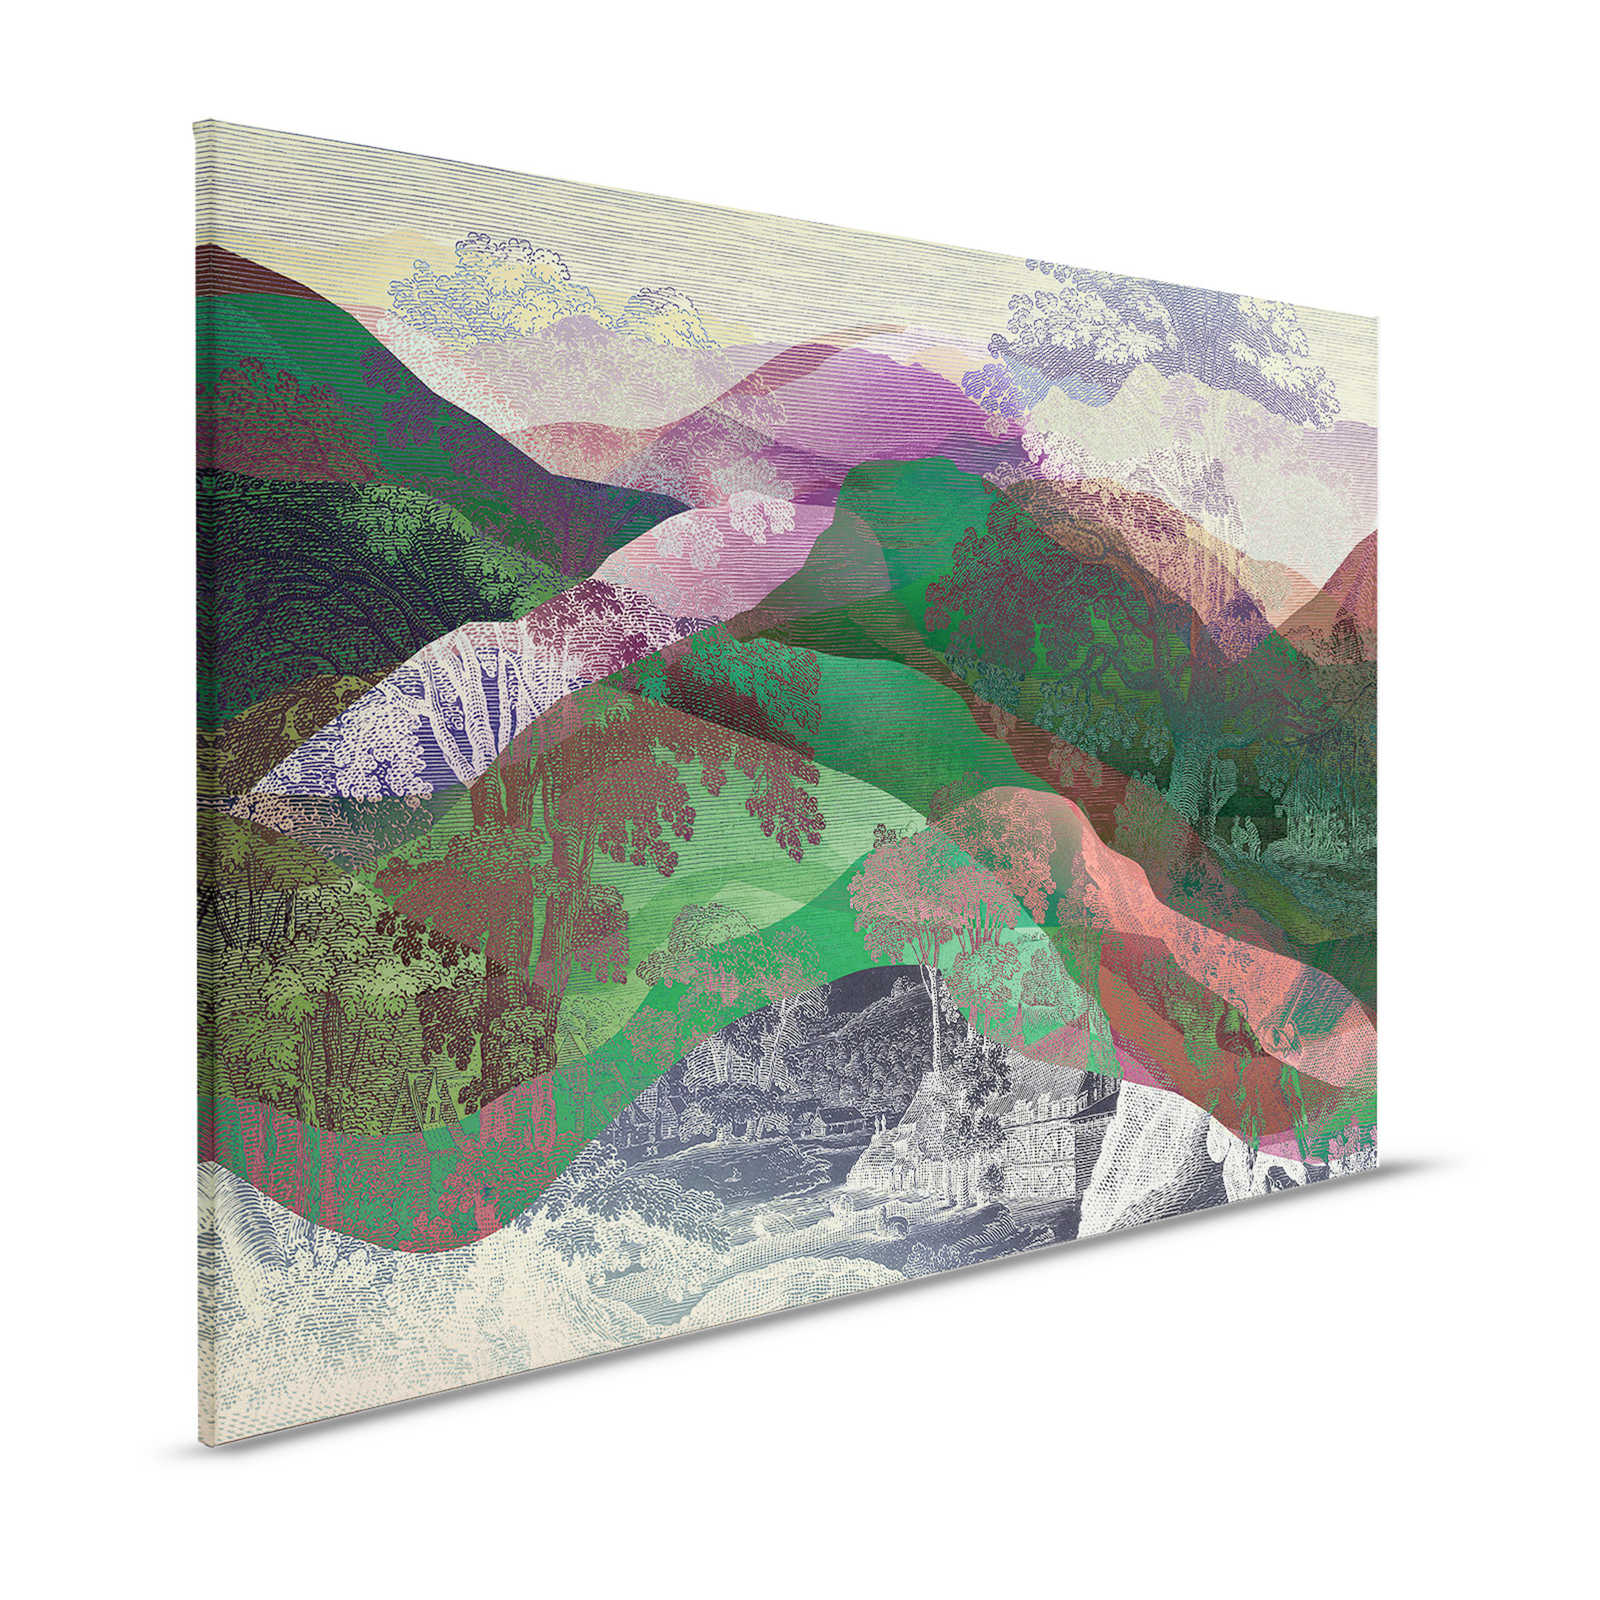 Hidden Valley 1 - Canvas painting Vintage meets Modern Mountain Landscape - 1.20 m x 0.80 m
